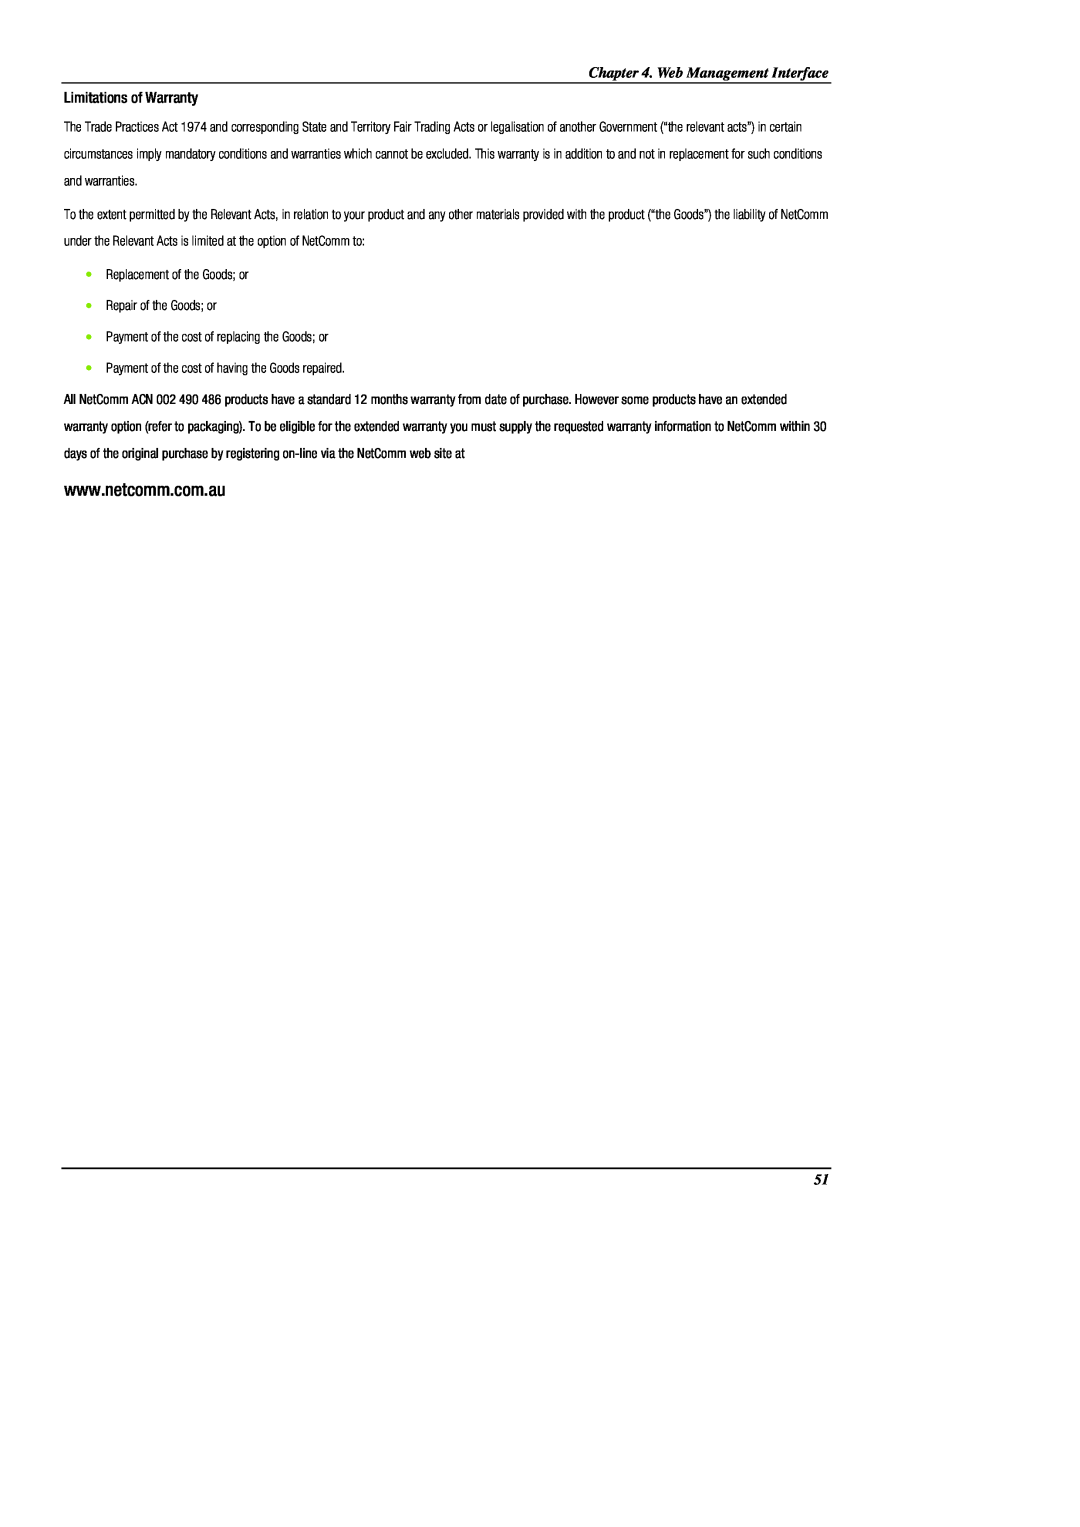 NetComm NP725 manual Web Management Interface, Limitations of Warranty 